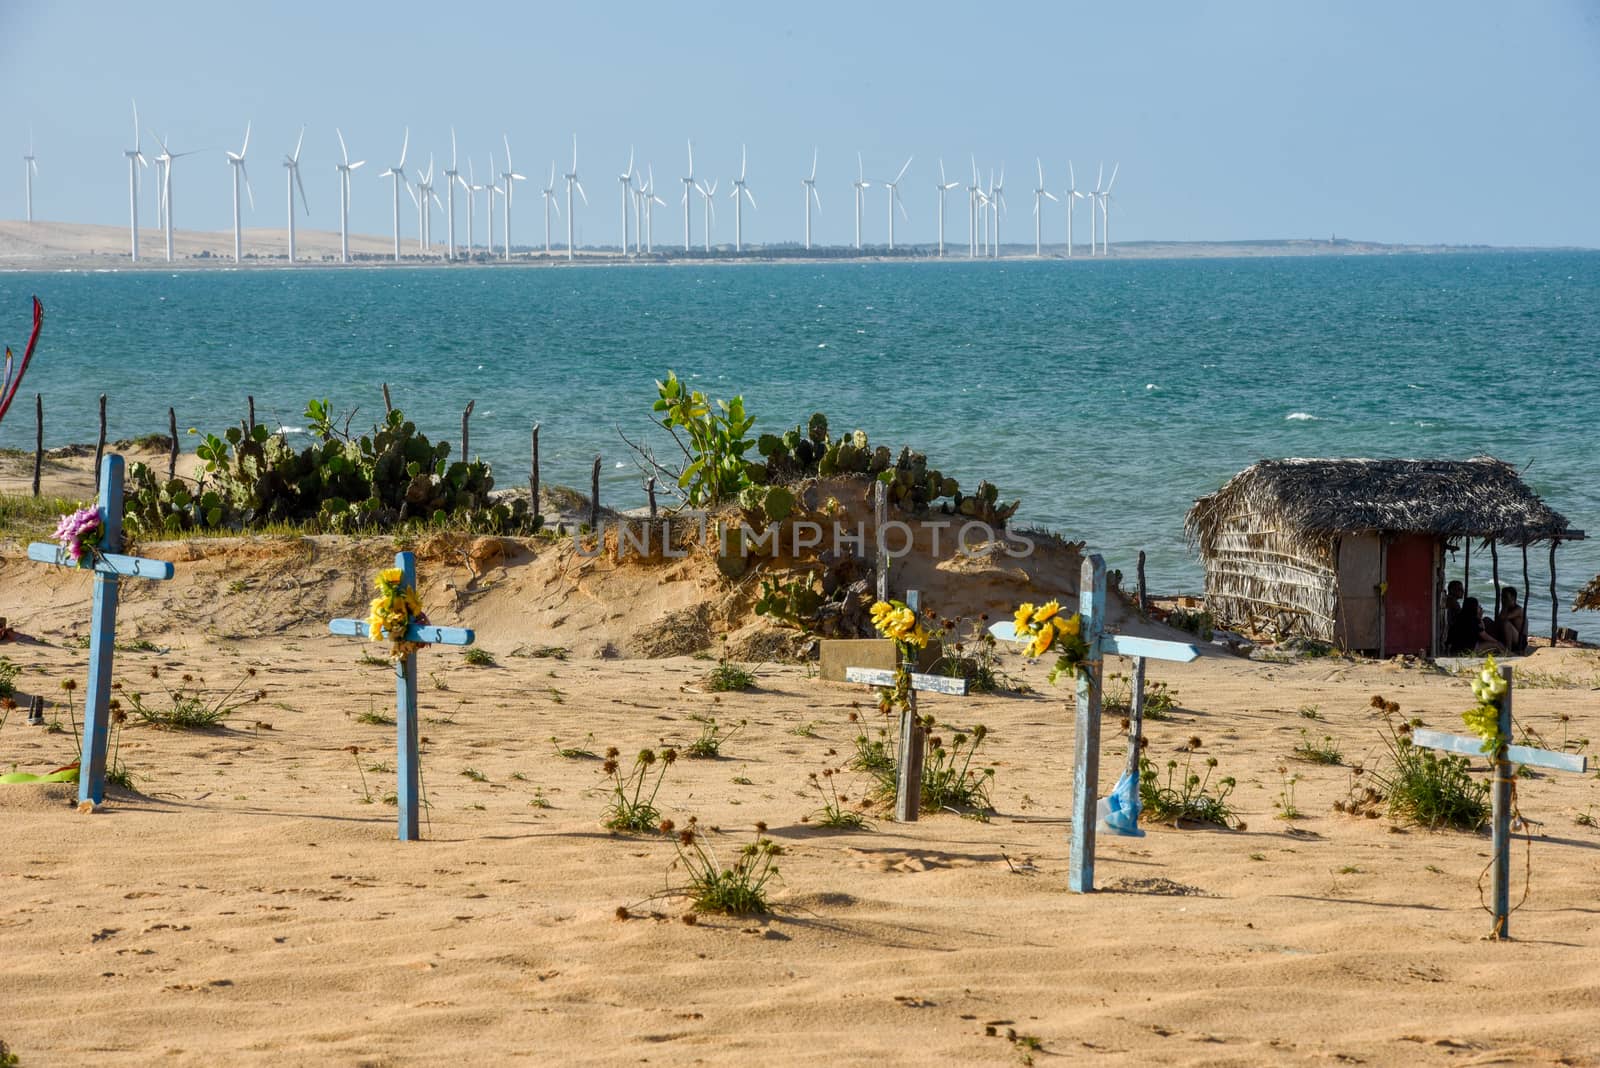 Cemetery on the beach and wind farm of Canoa Quebrada in Brazil